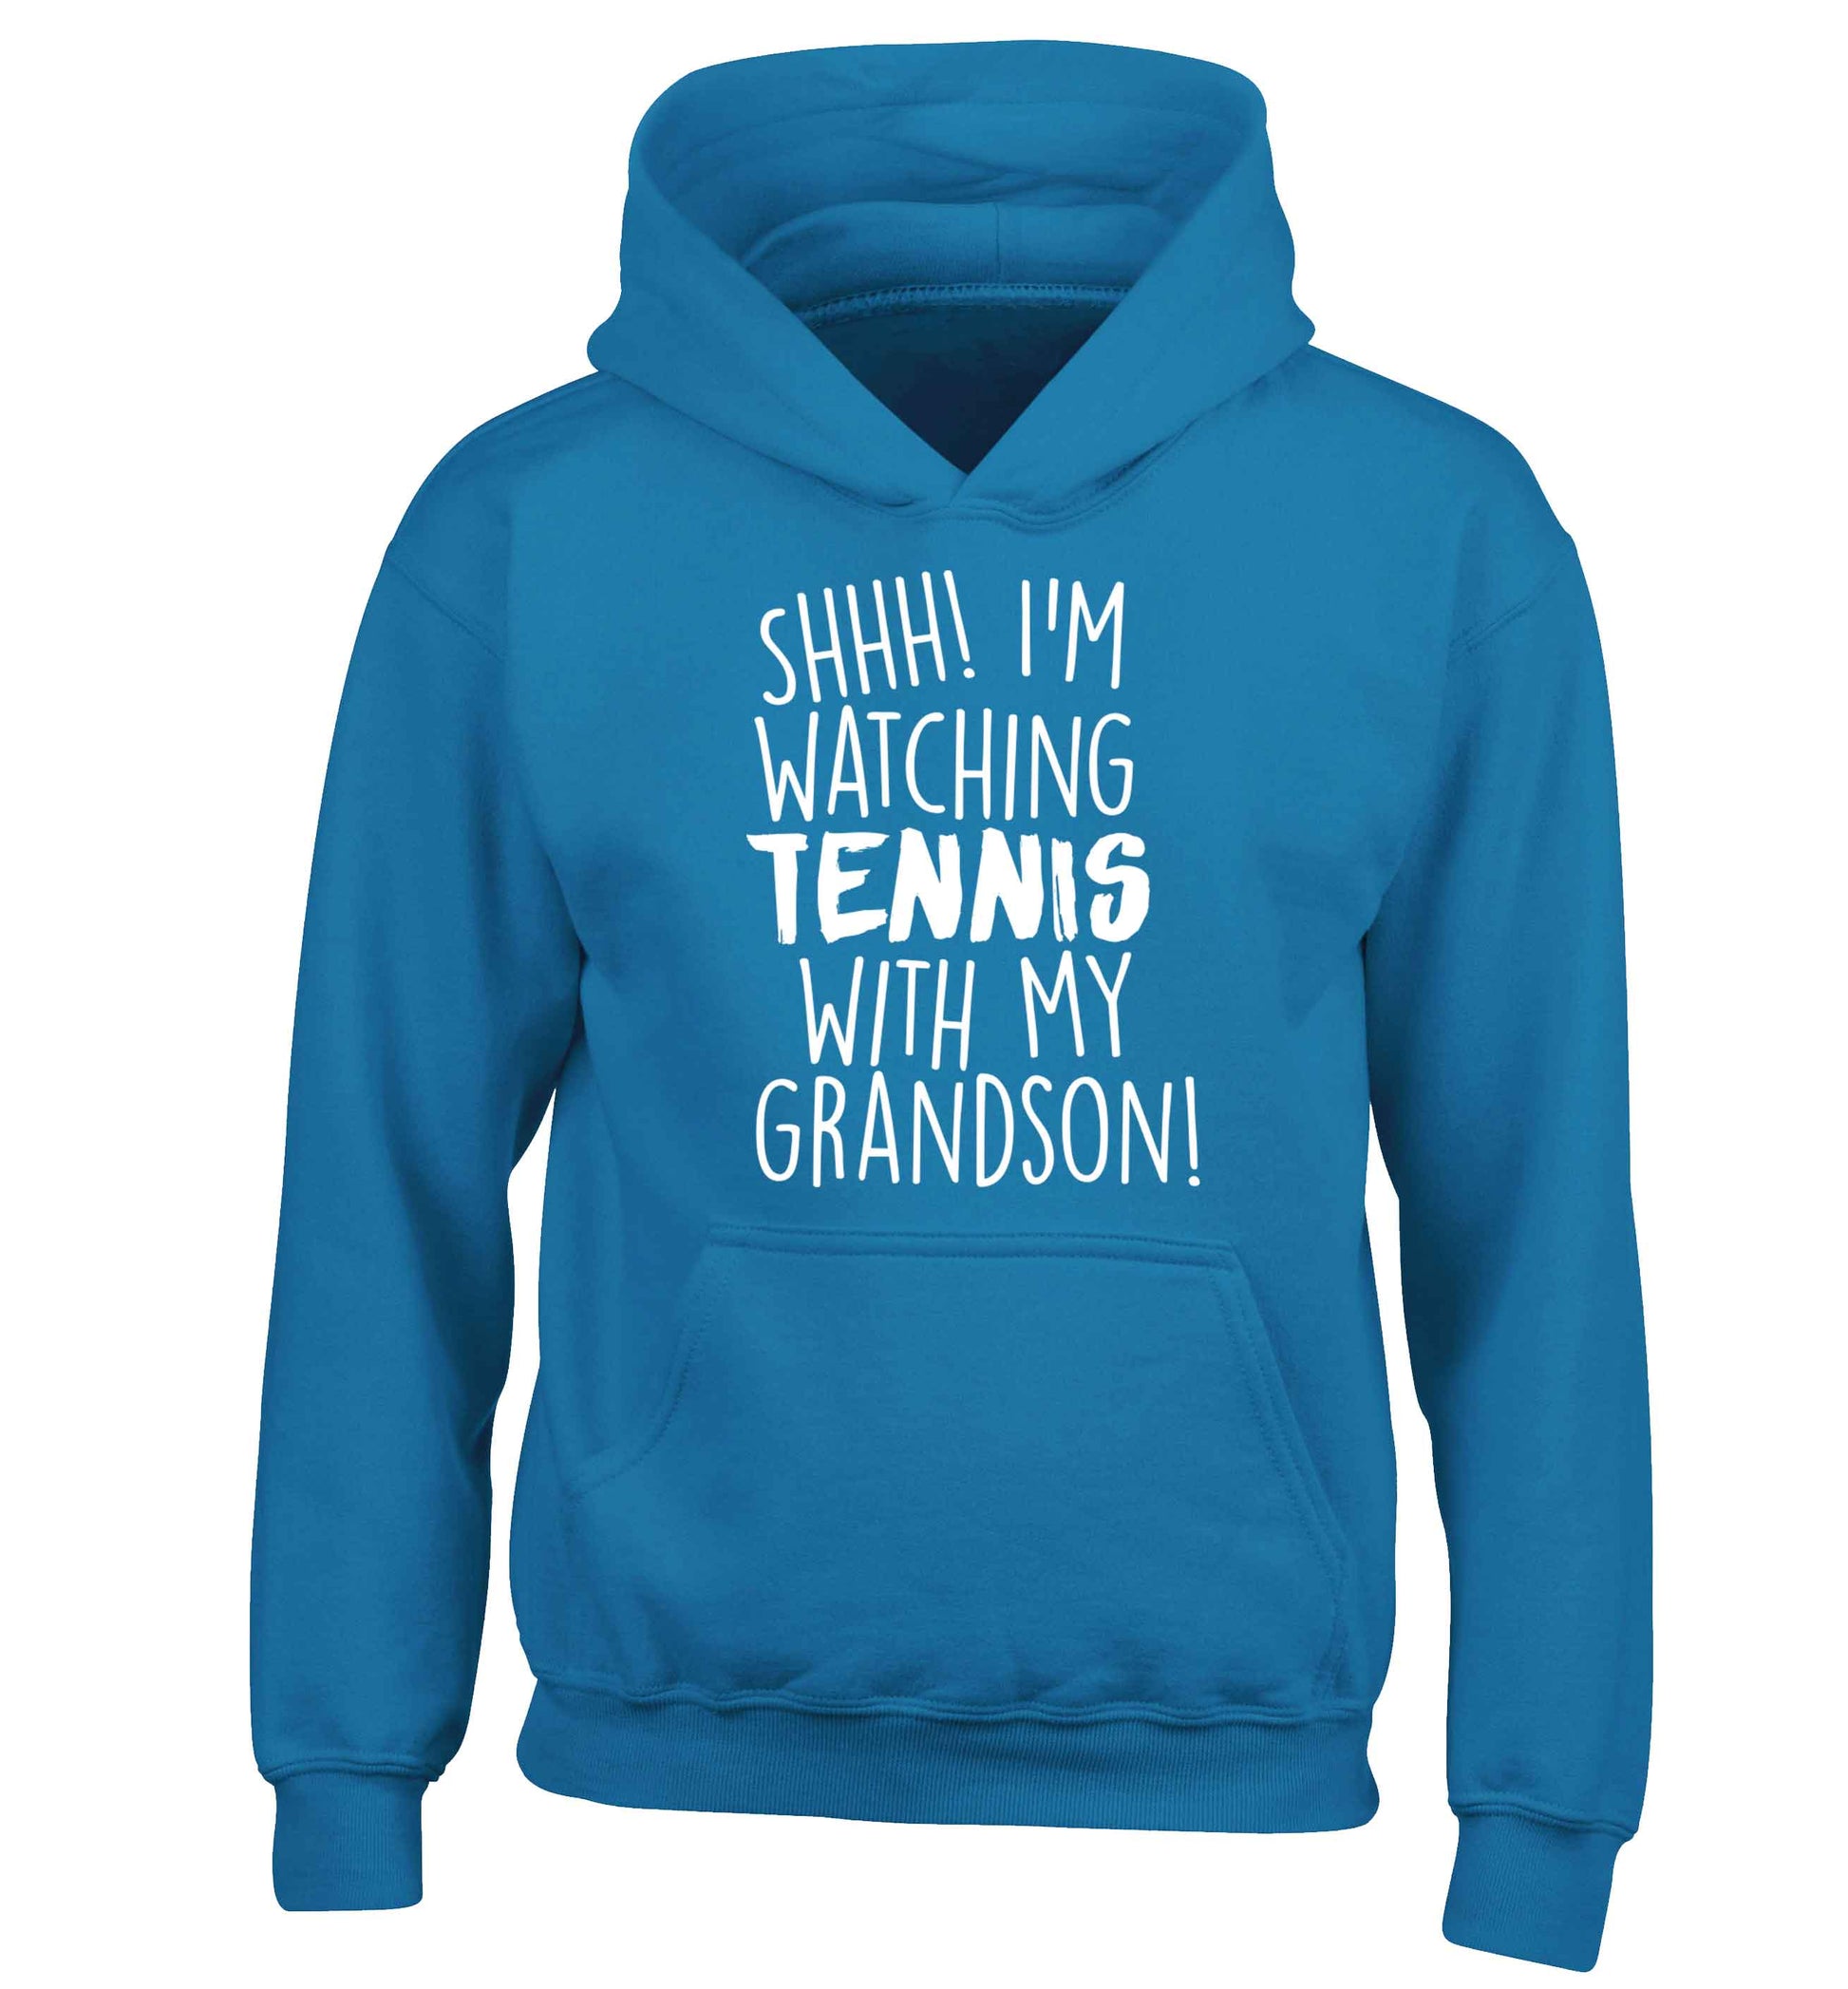 Shh! I'm watching tennis with my grandson! children's blue hoodie 12-13 Years